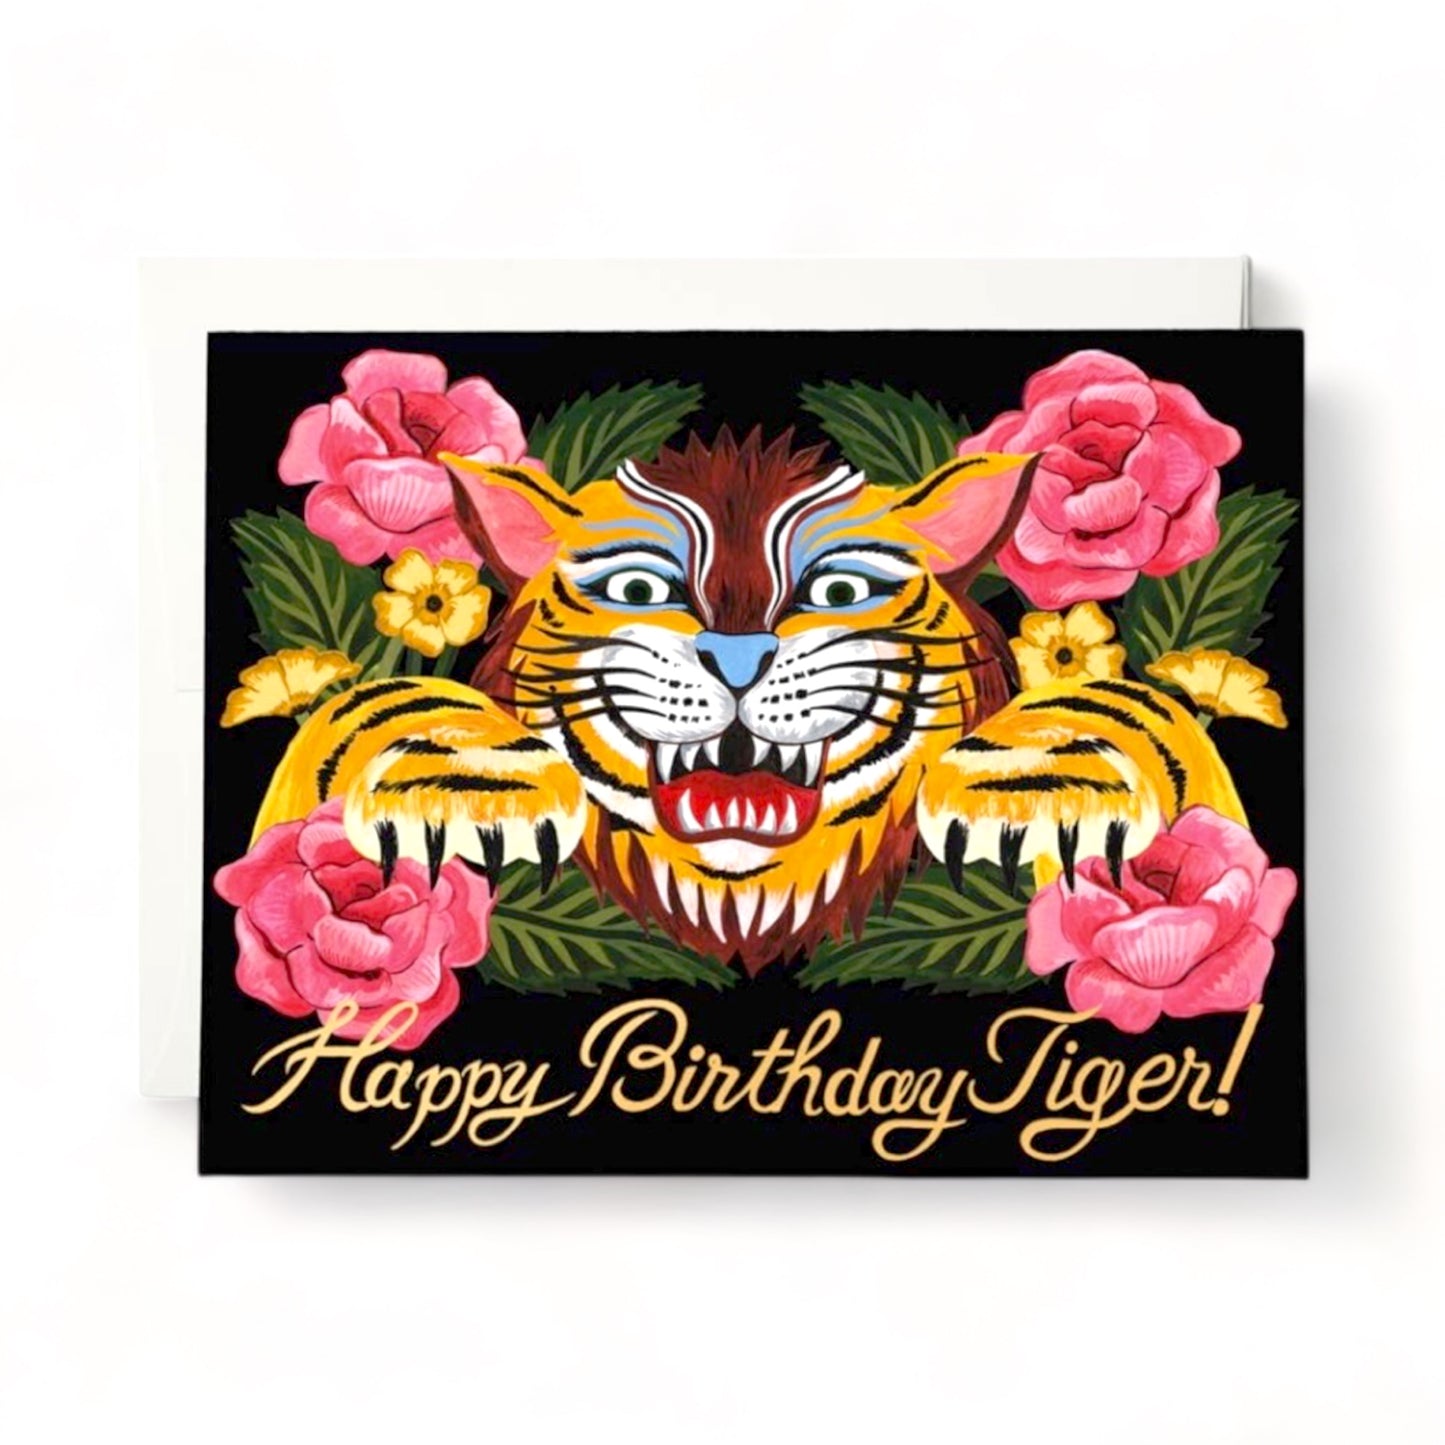 Happy Birthday Tiger Greeting Card - Hella Kitsch